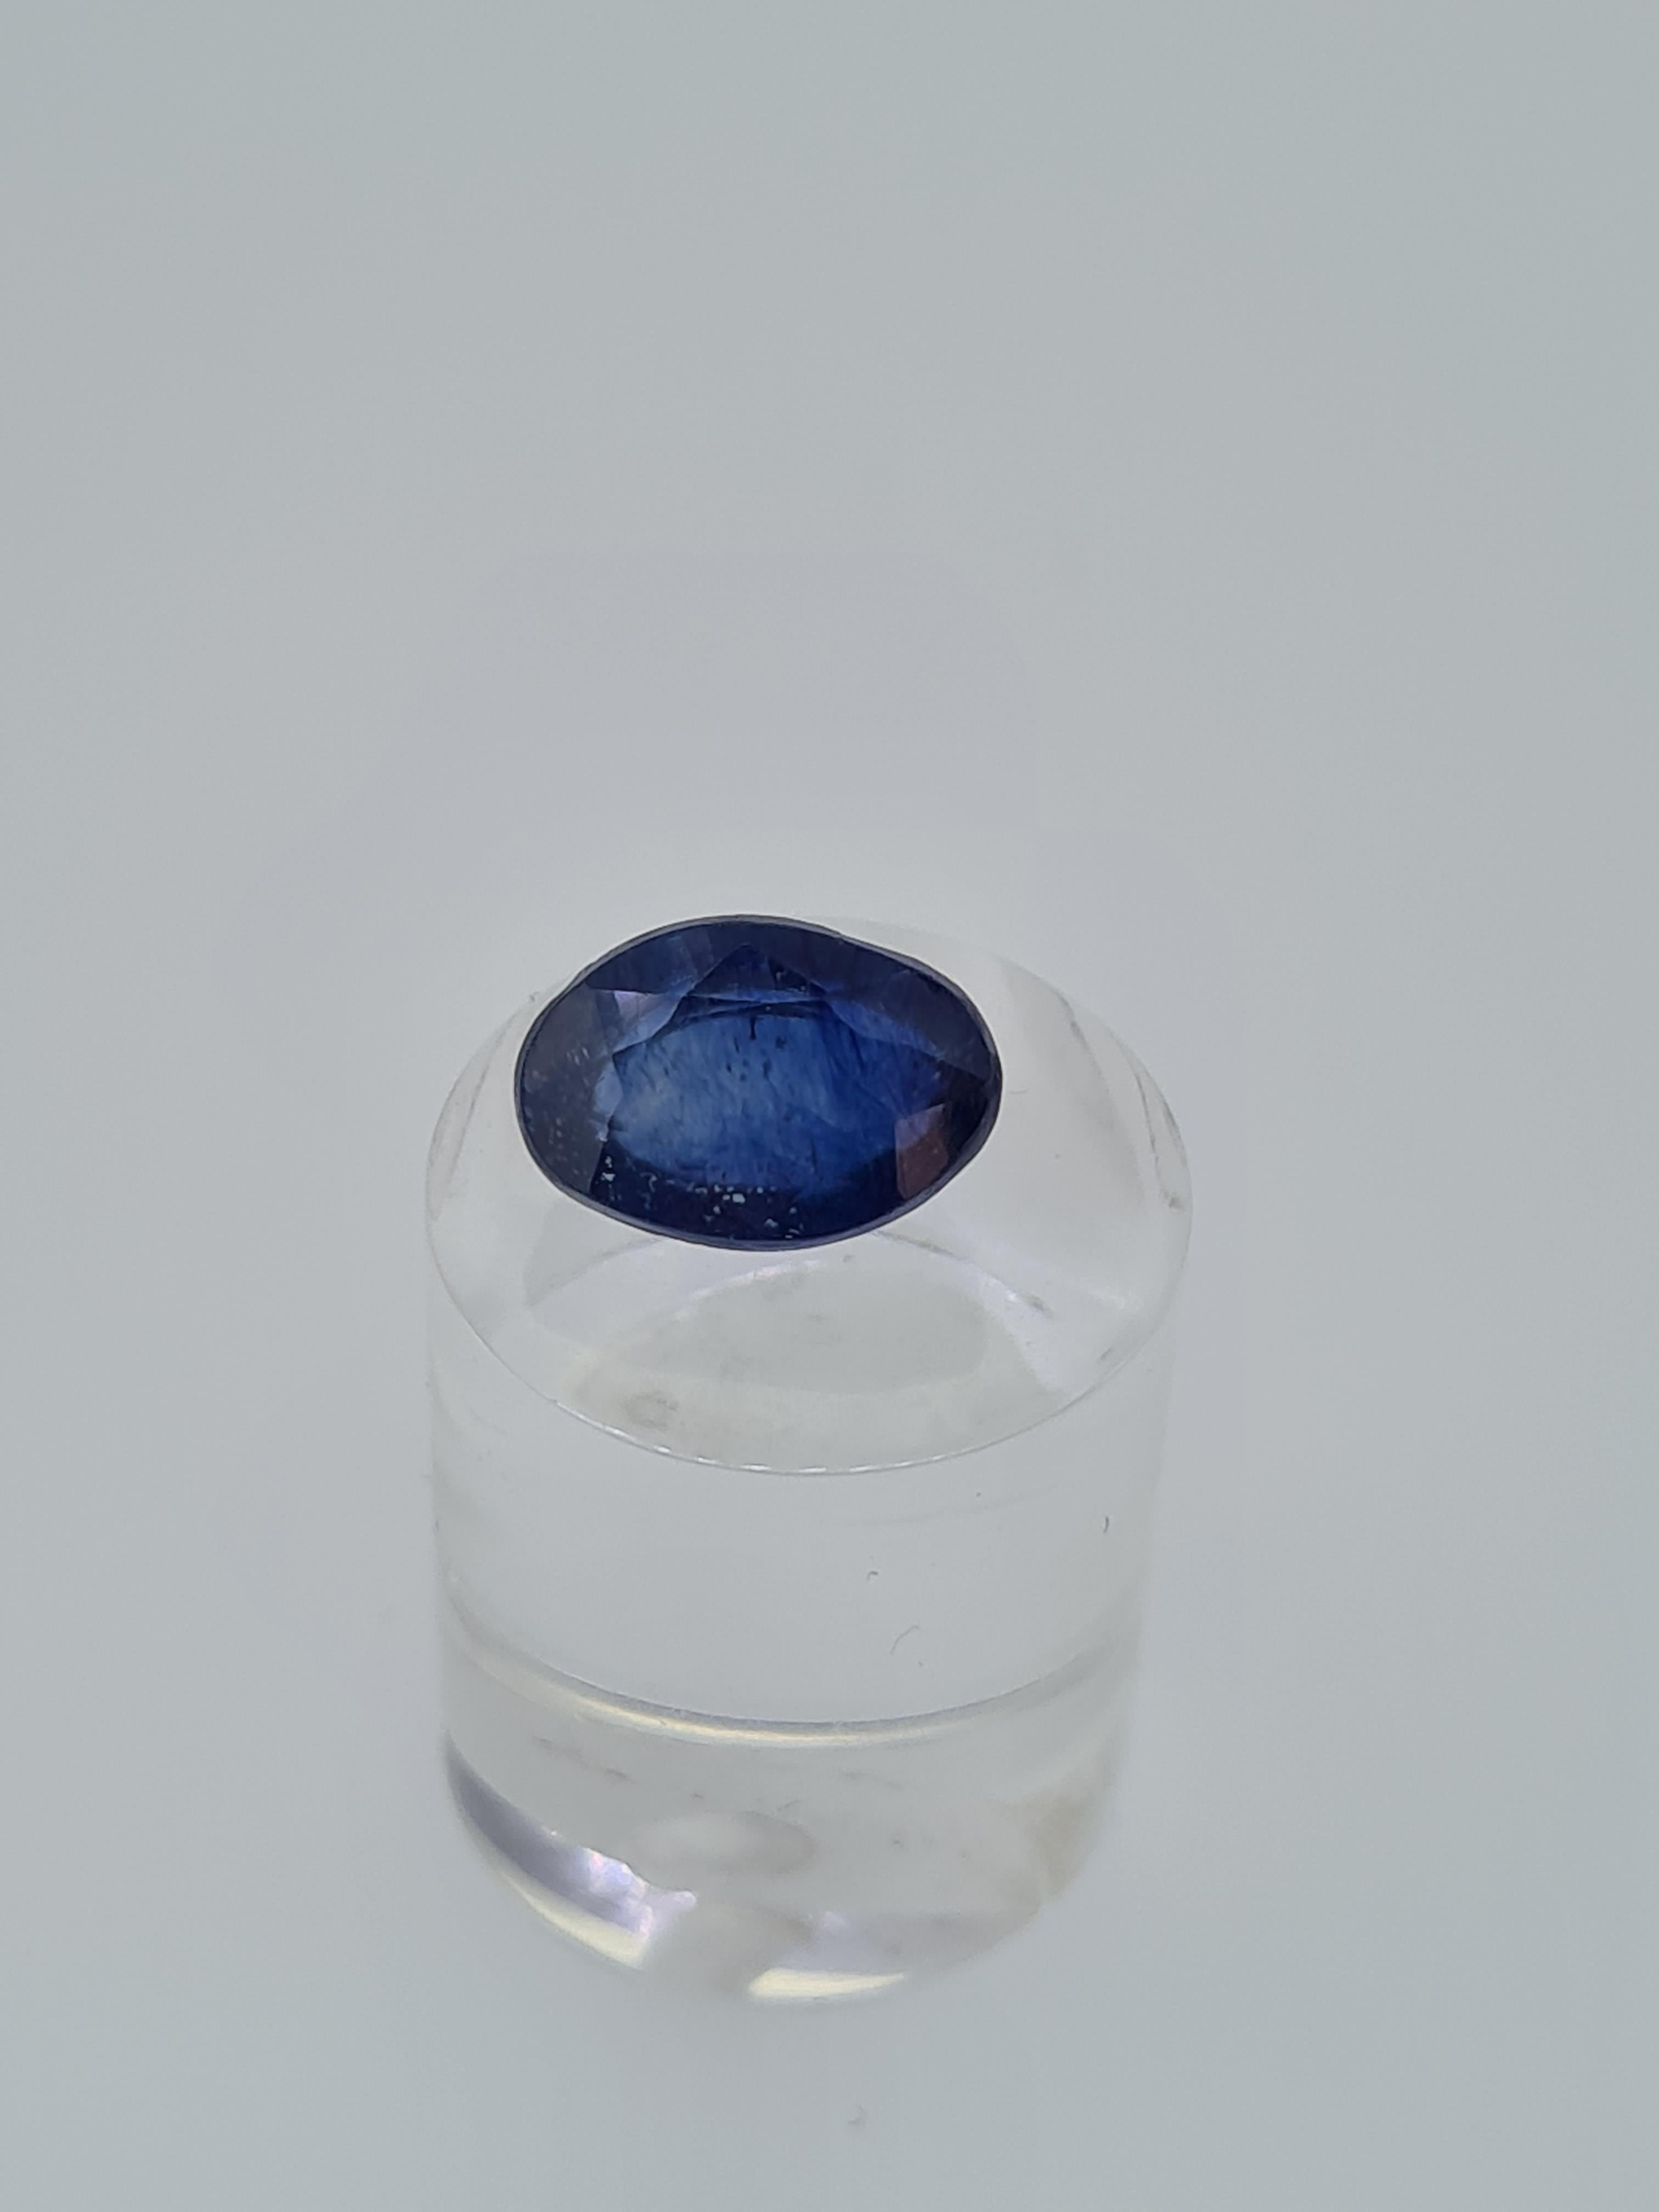 Sapphire oval cut gem stone - Image 2 of 6